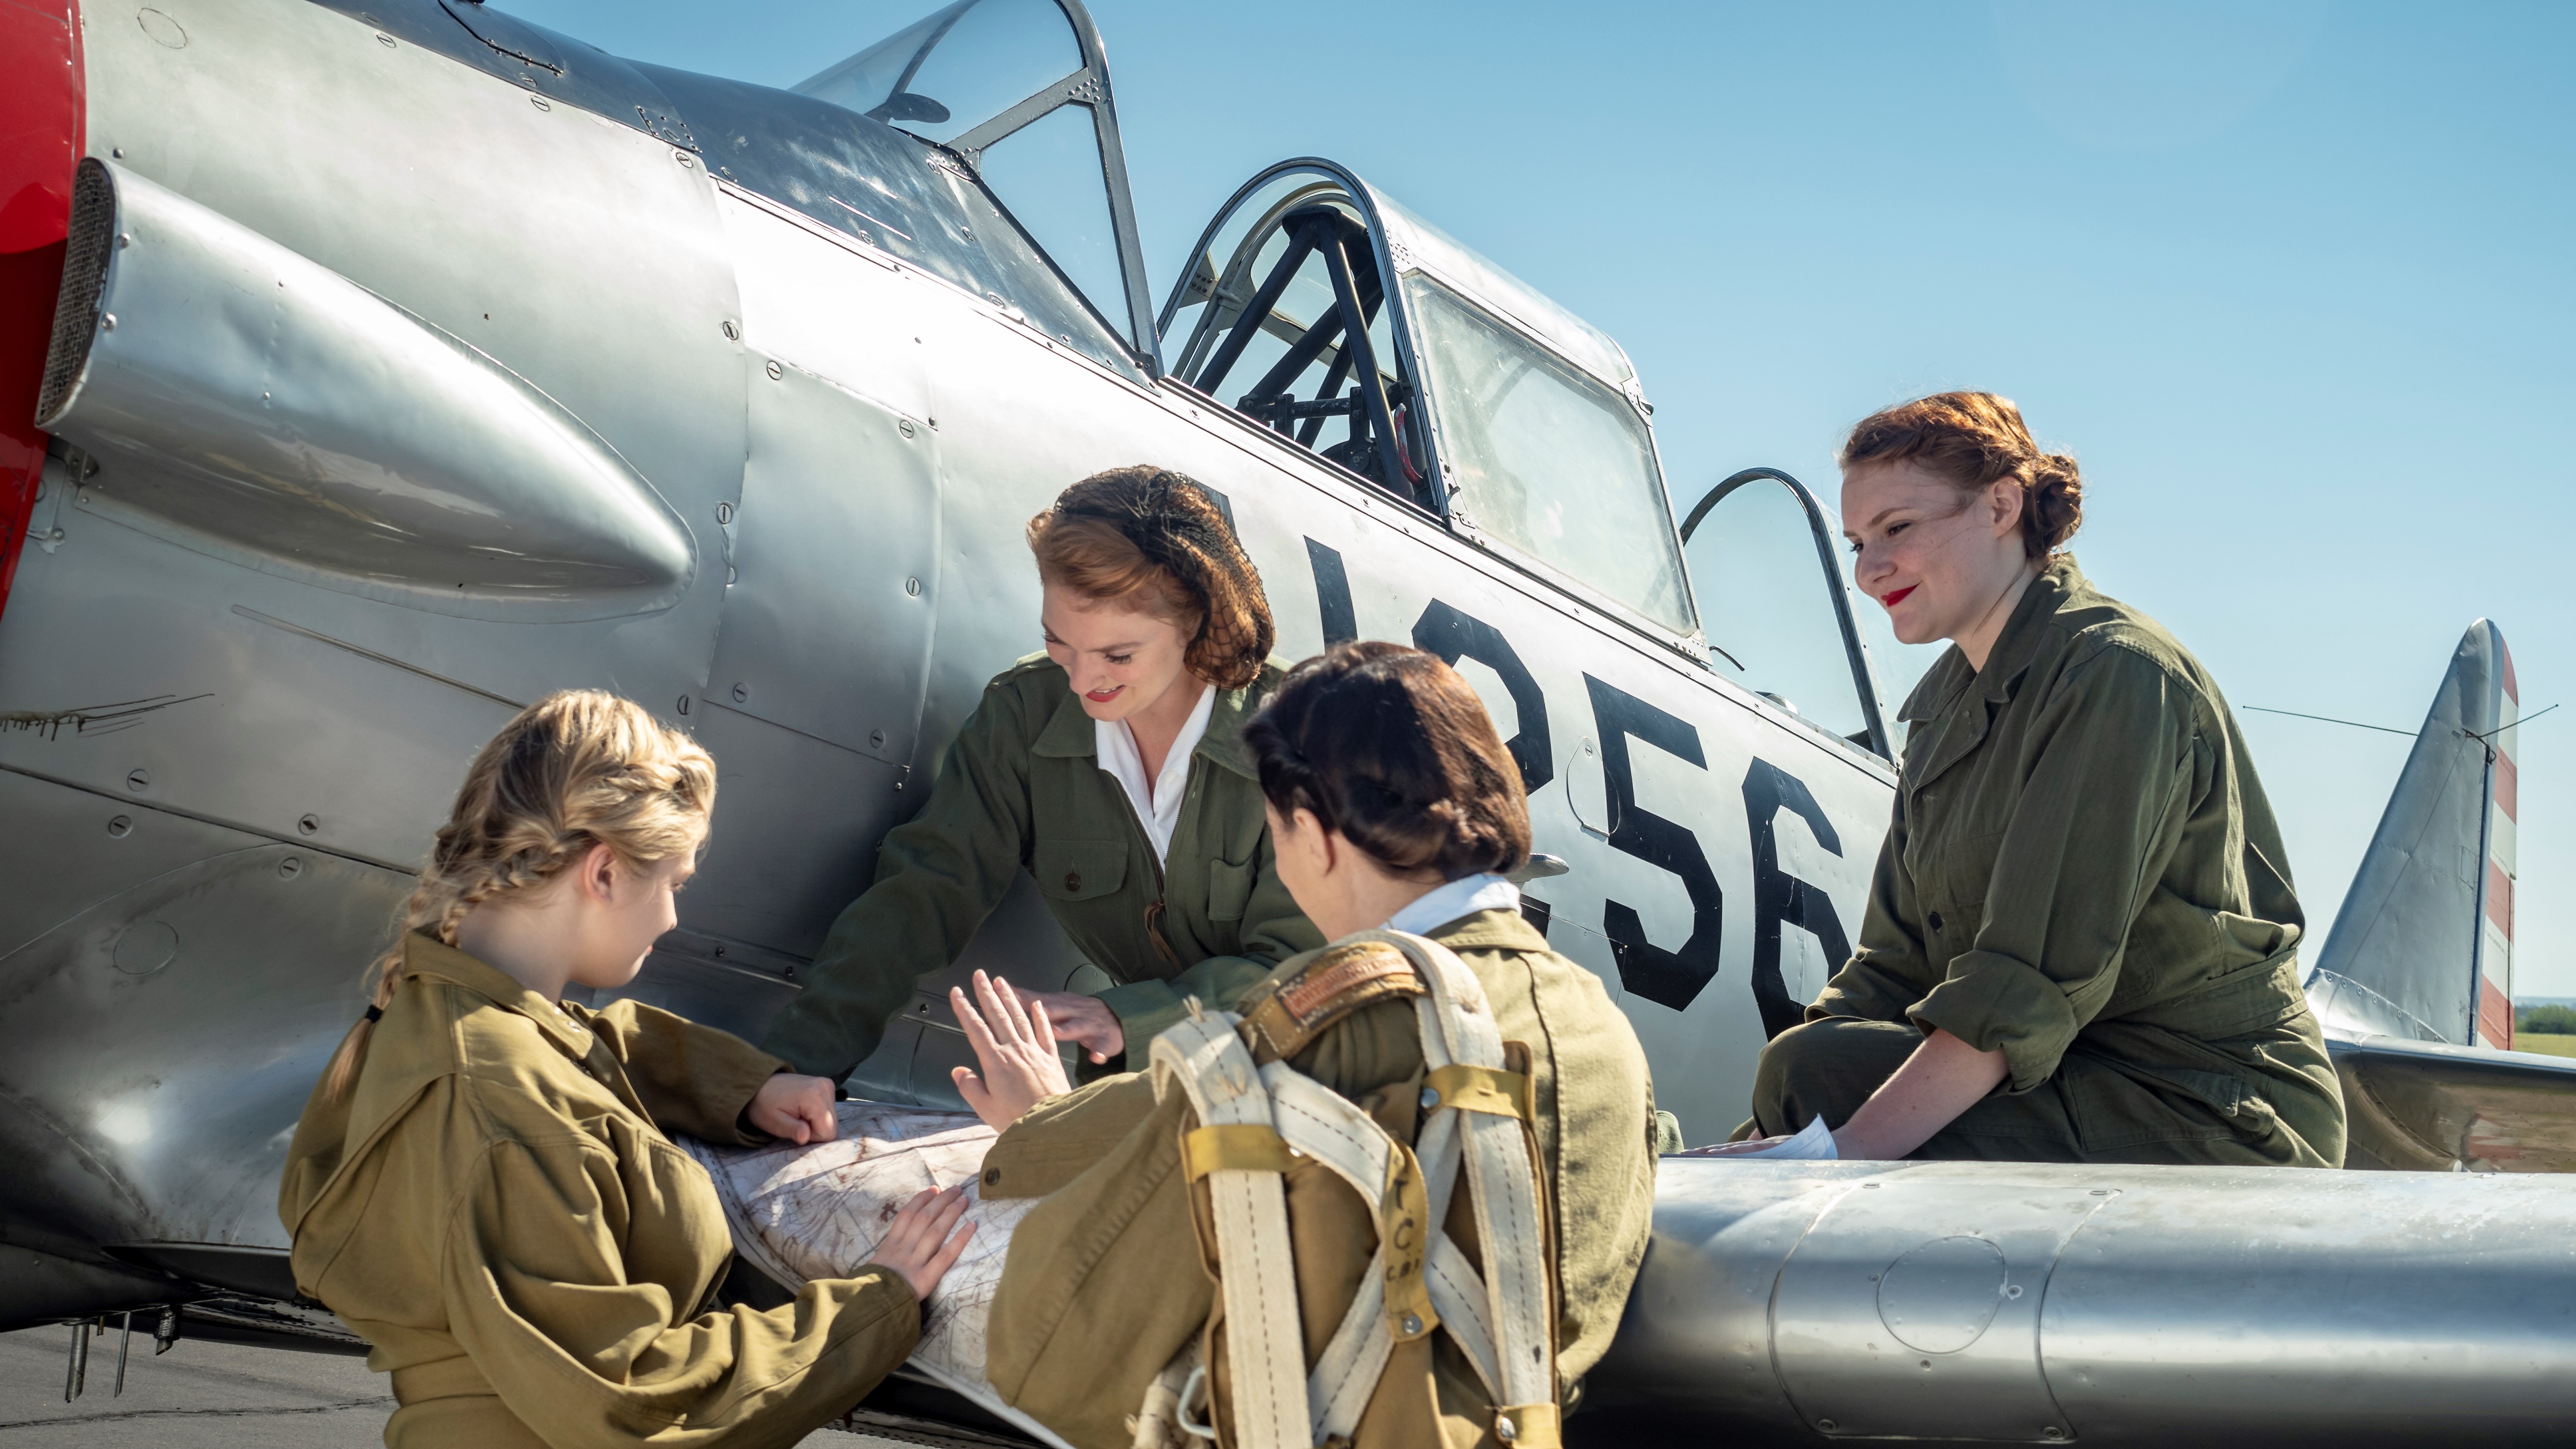 Women Airforce Service Pilots standing next to aircraft